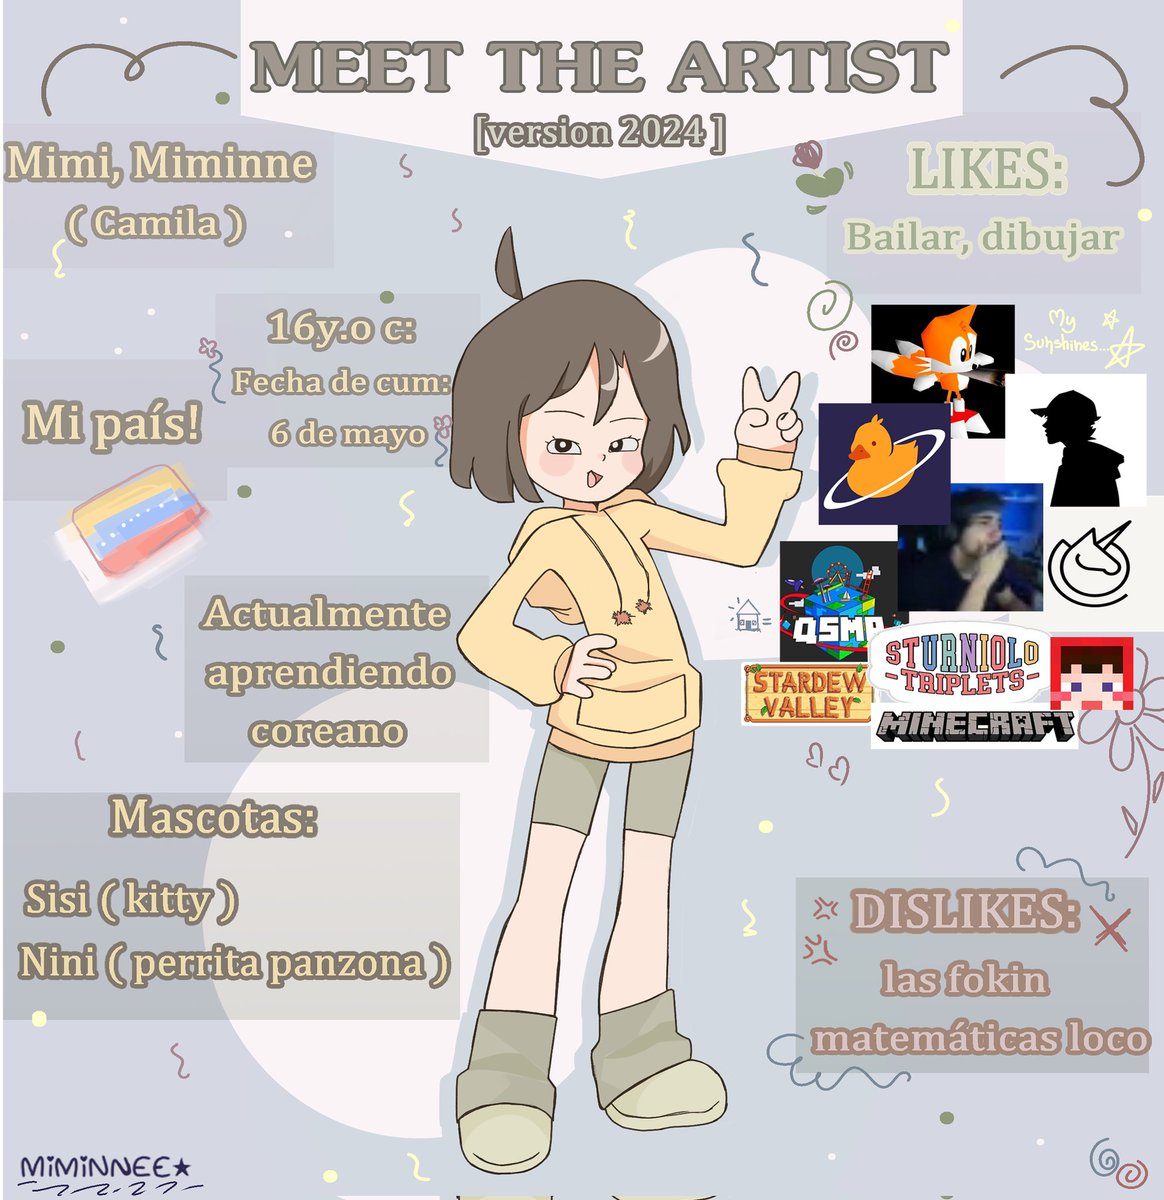 MEET THE ARTIST! 
edición 2024 feliz cumpleaños mimi
#oc #meettheartist